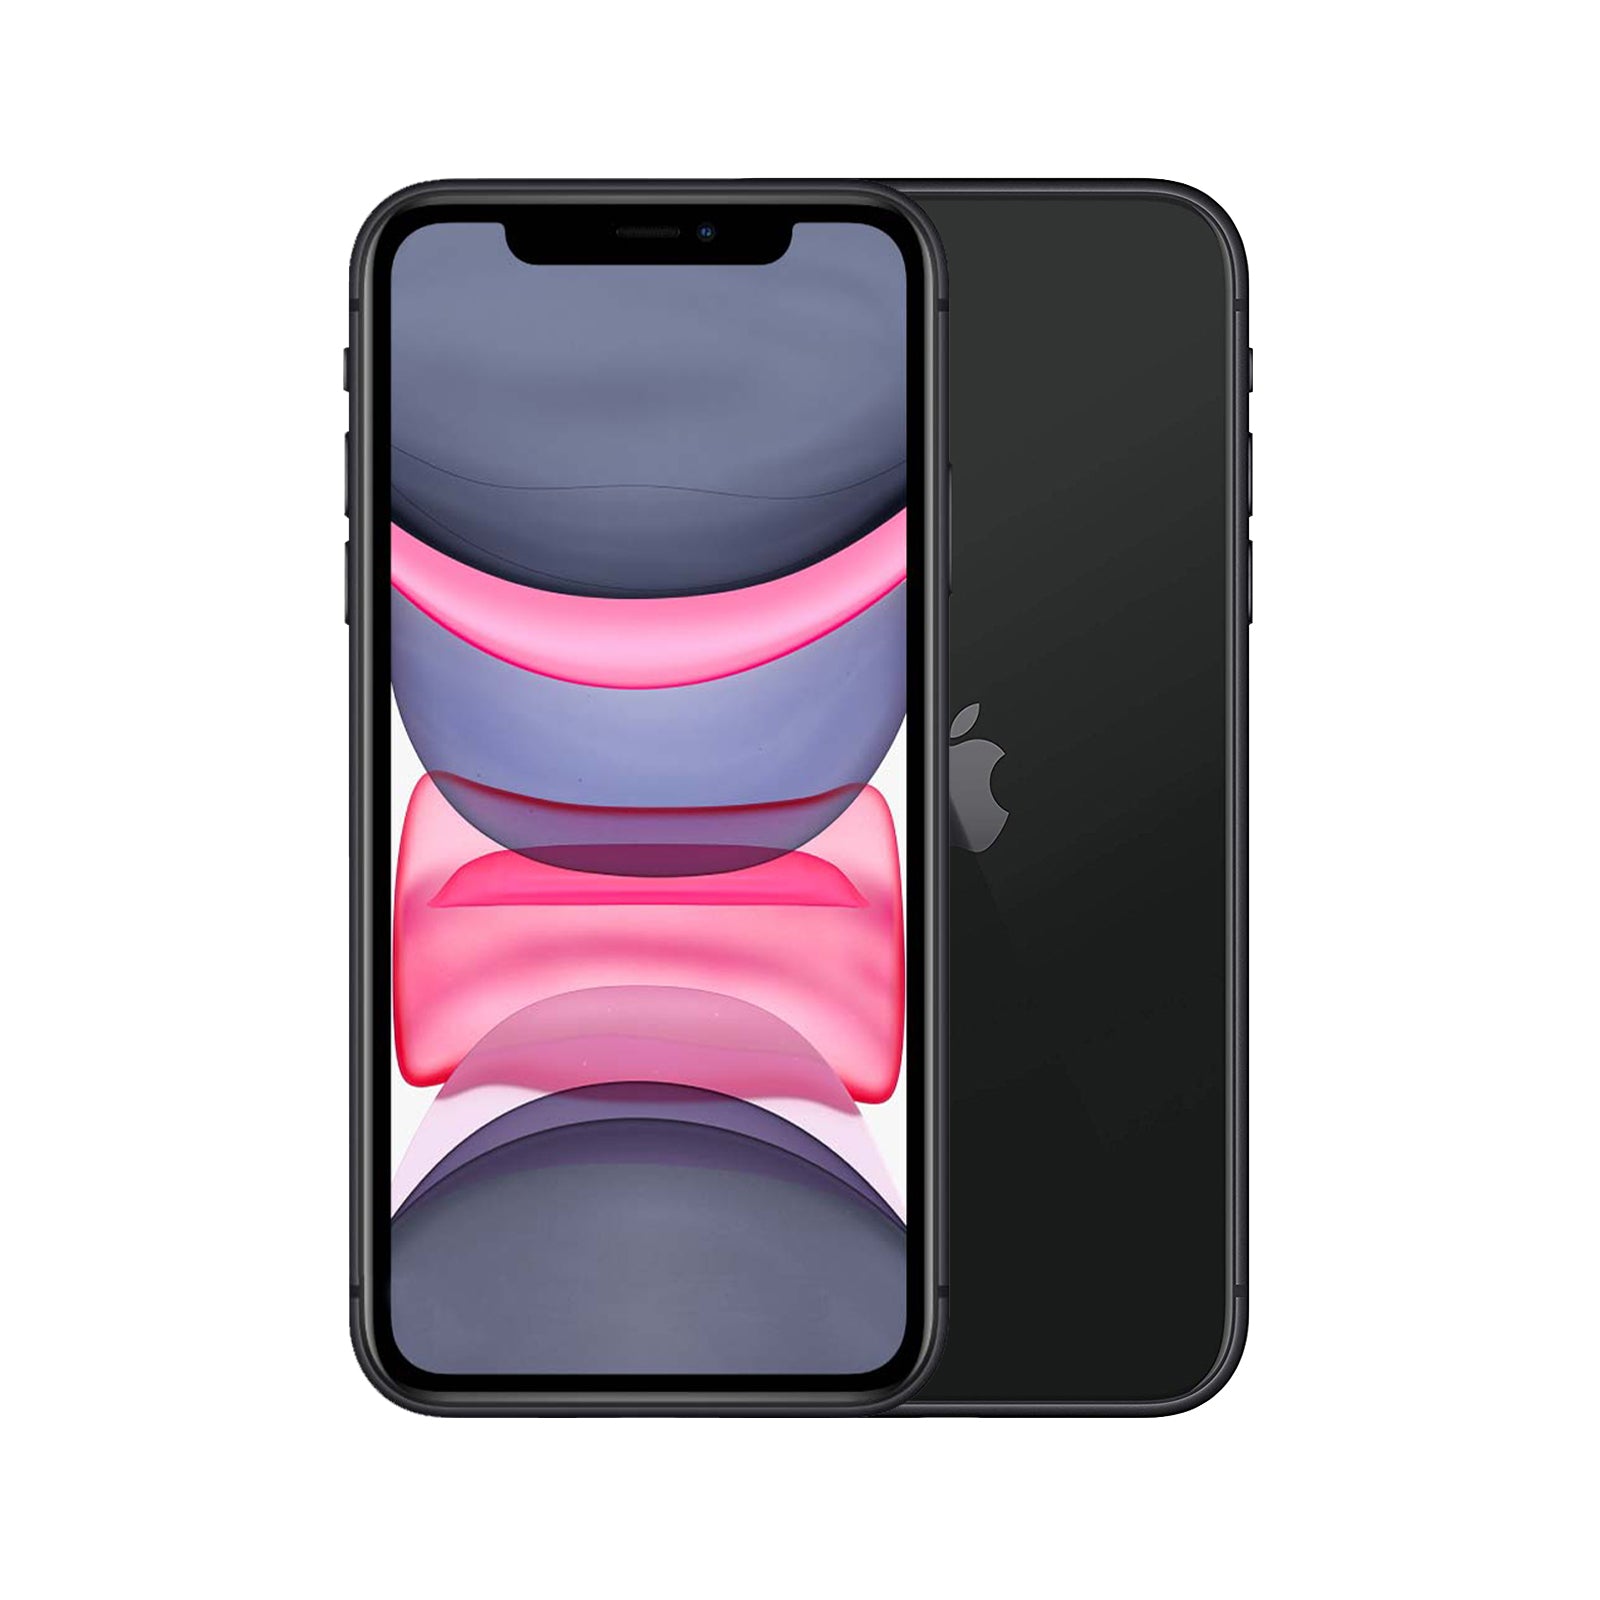 Apple iPhone 11 128GB Black - Good Refurbished